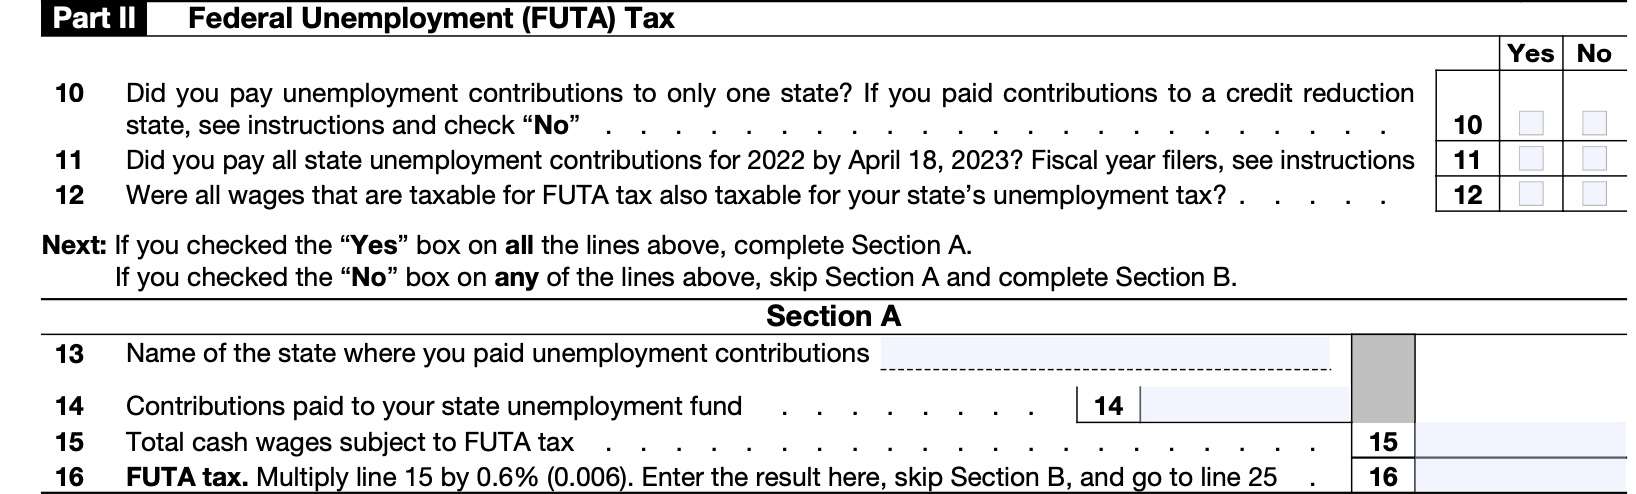 Part II: Federal Unemployment (FUTA) tax